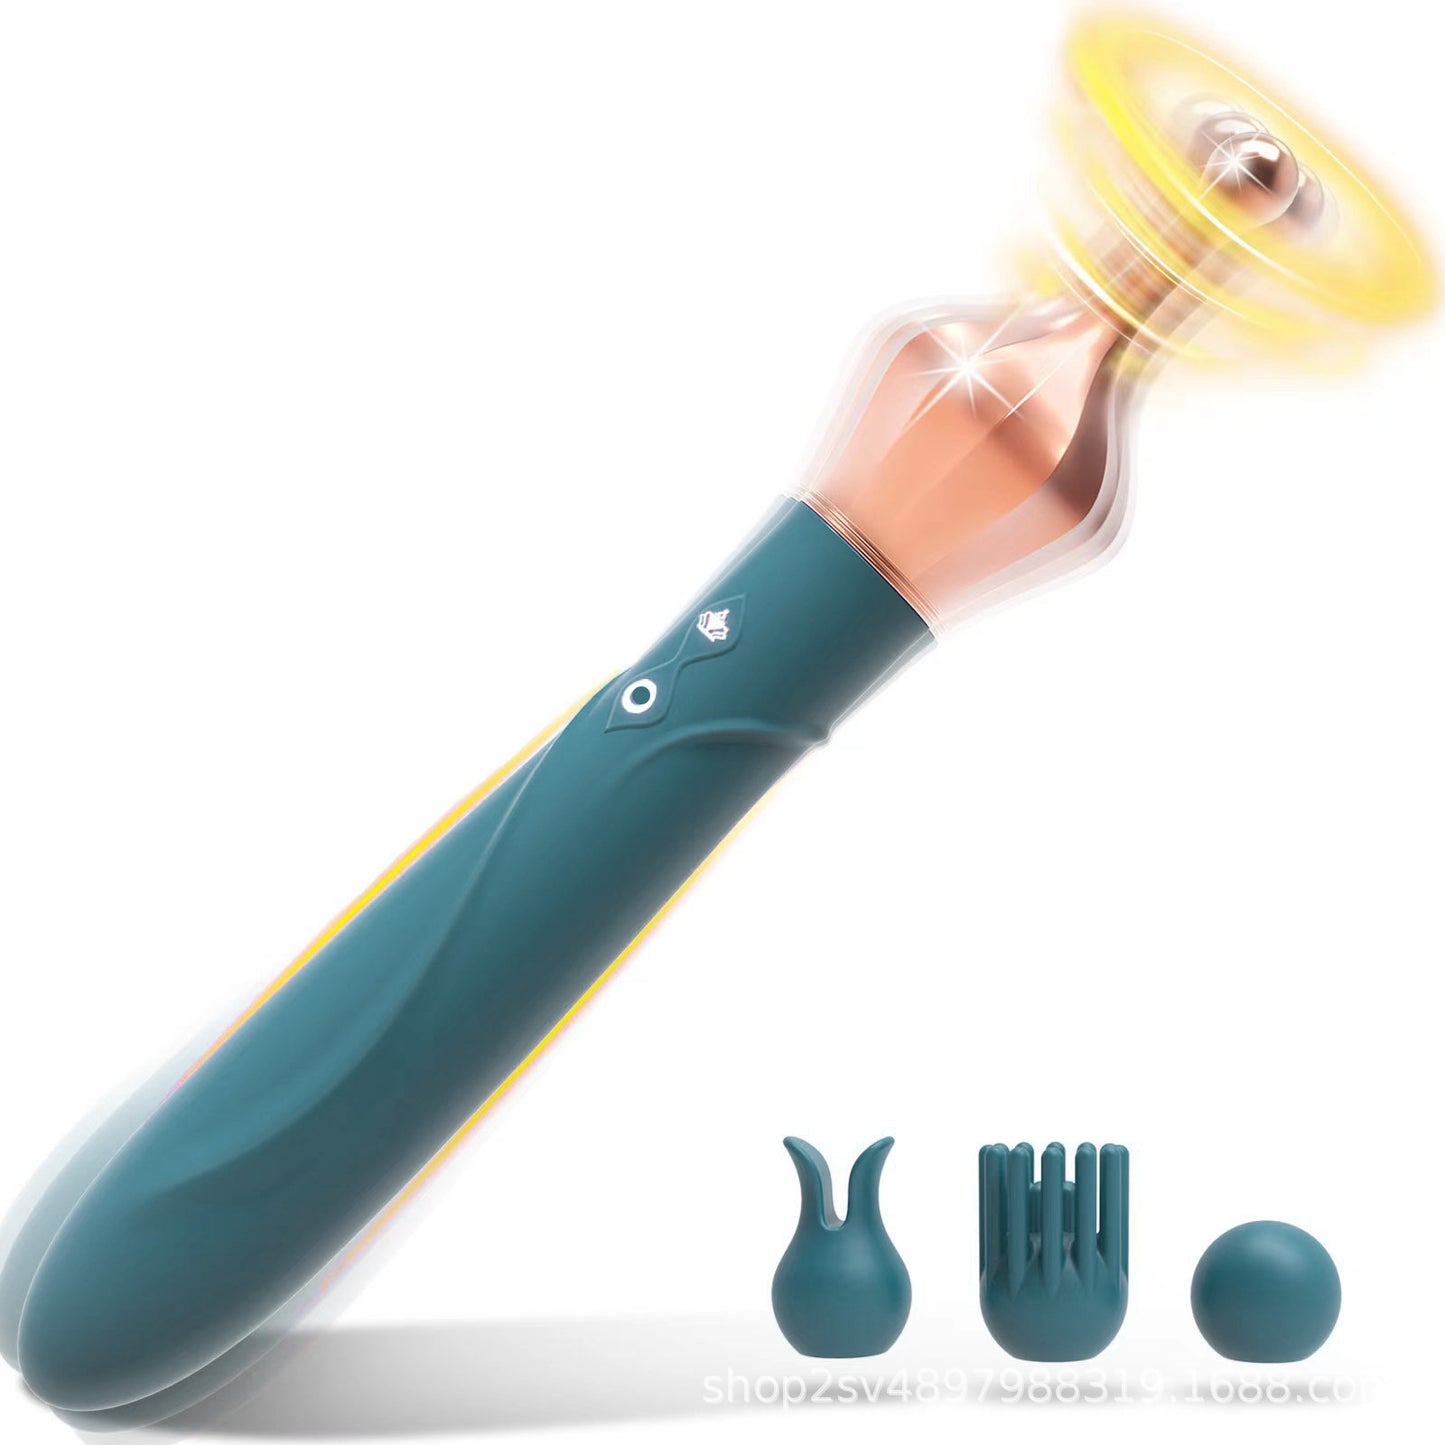 G-Punkt-Vibrator mit Doppelende, Klitorisstimulator – vibrierender Make-up-Stift, Nippel, Analsexspielzeug